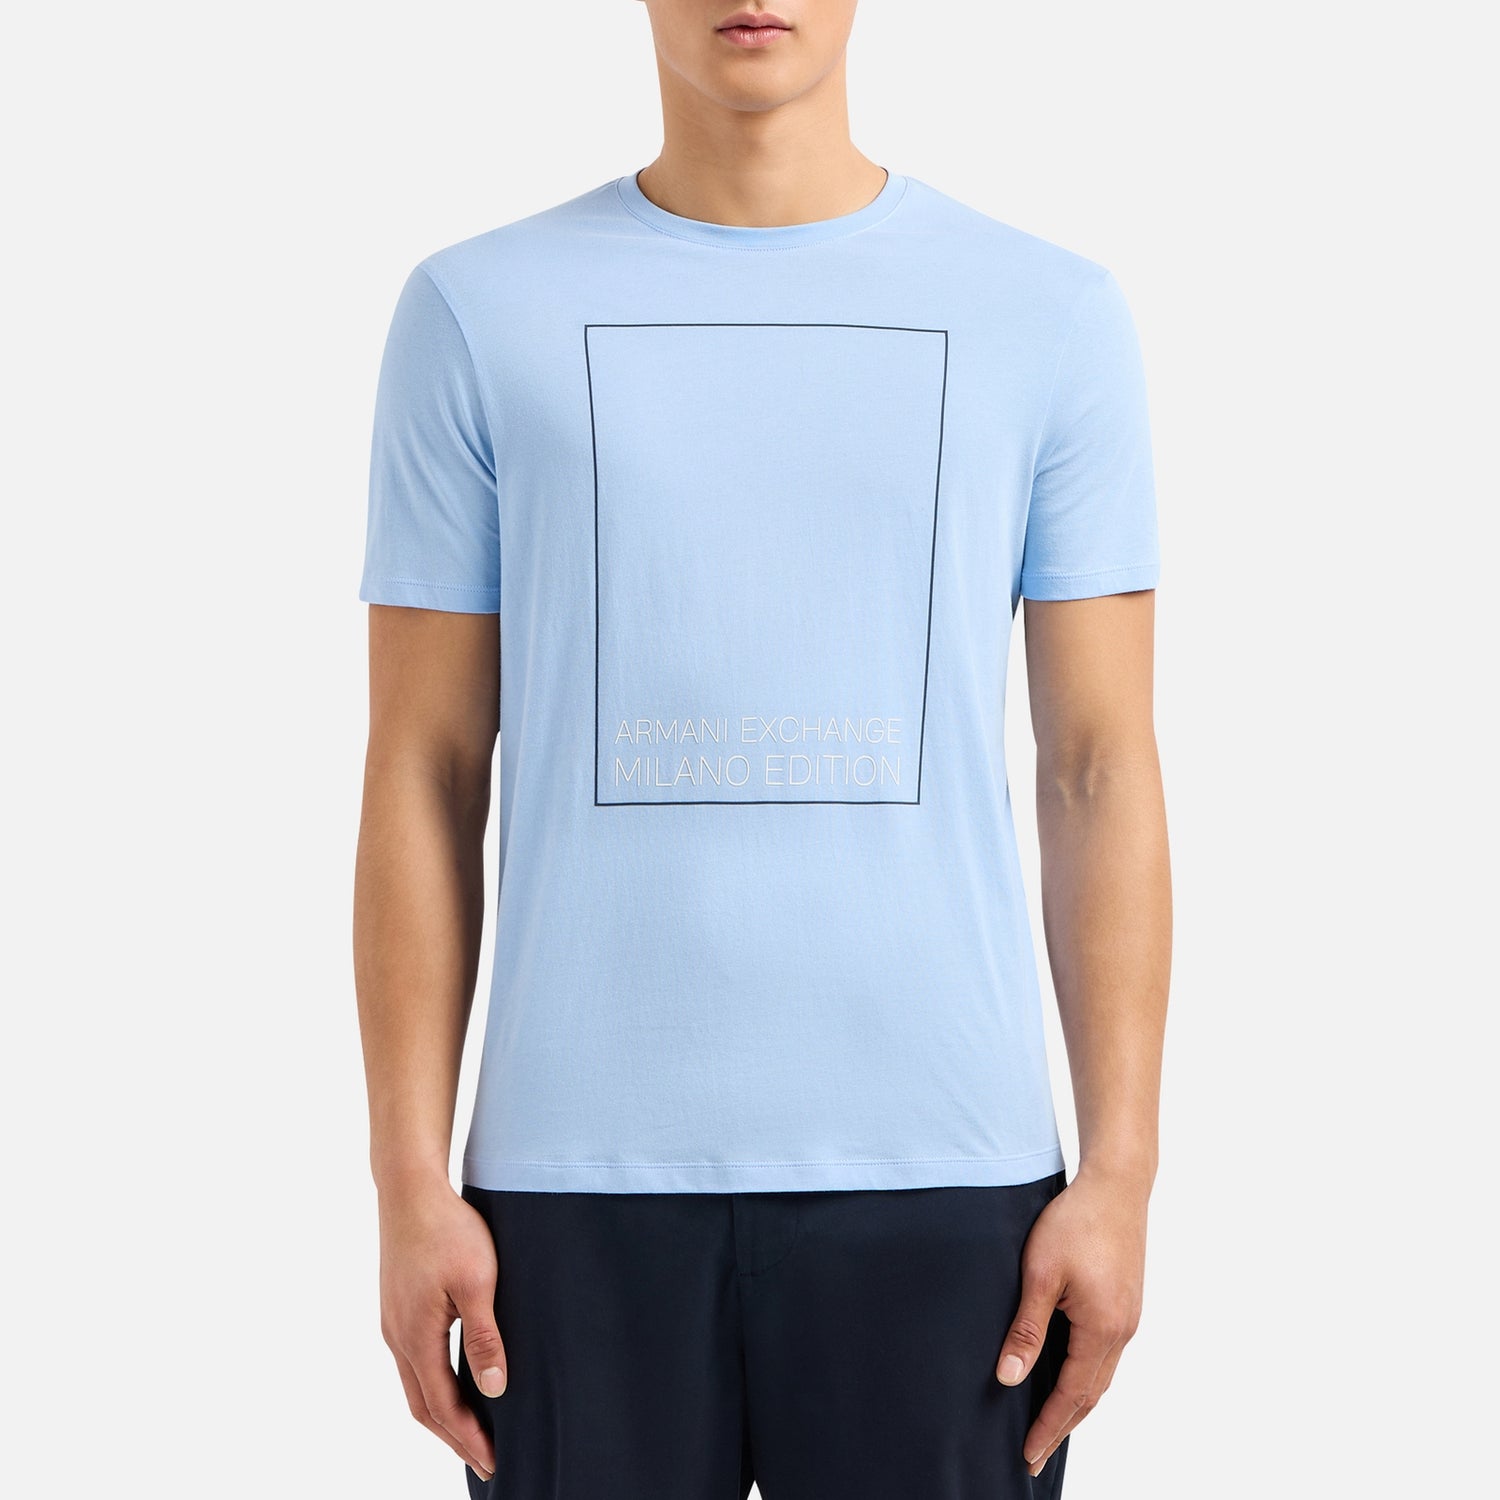 Armani Exchange Men's Milano Edition T-Shirt - Blue - M